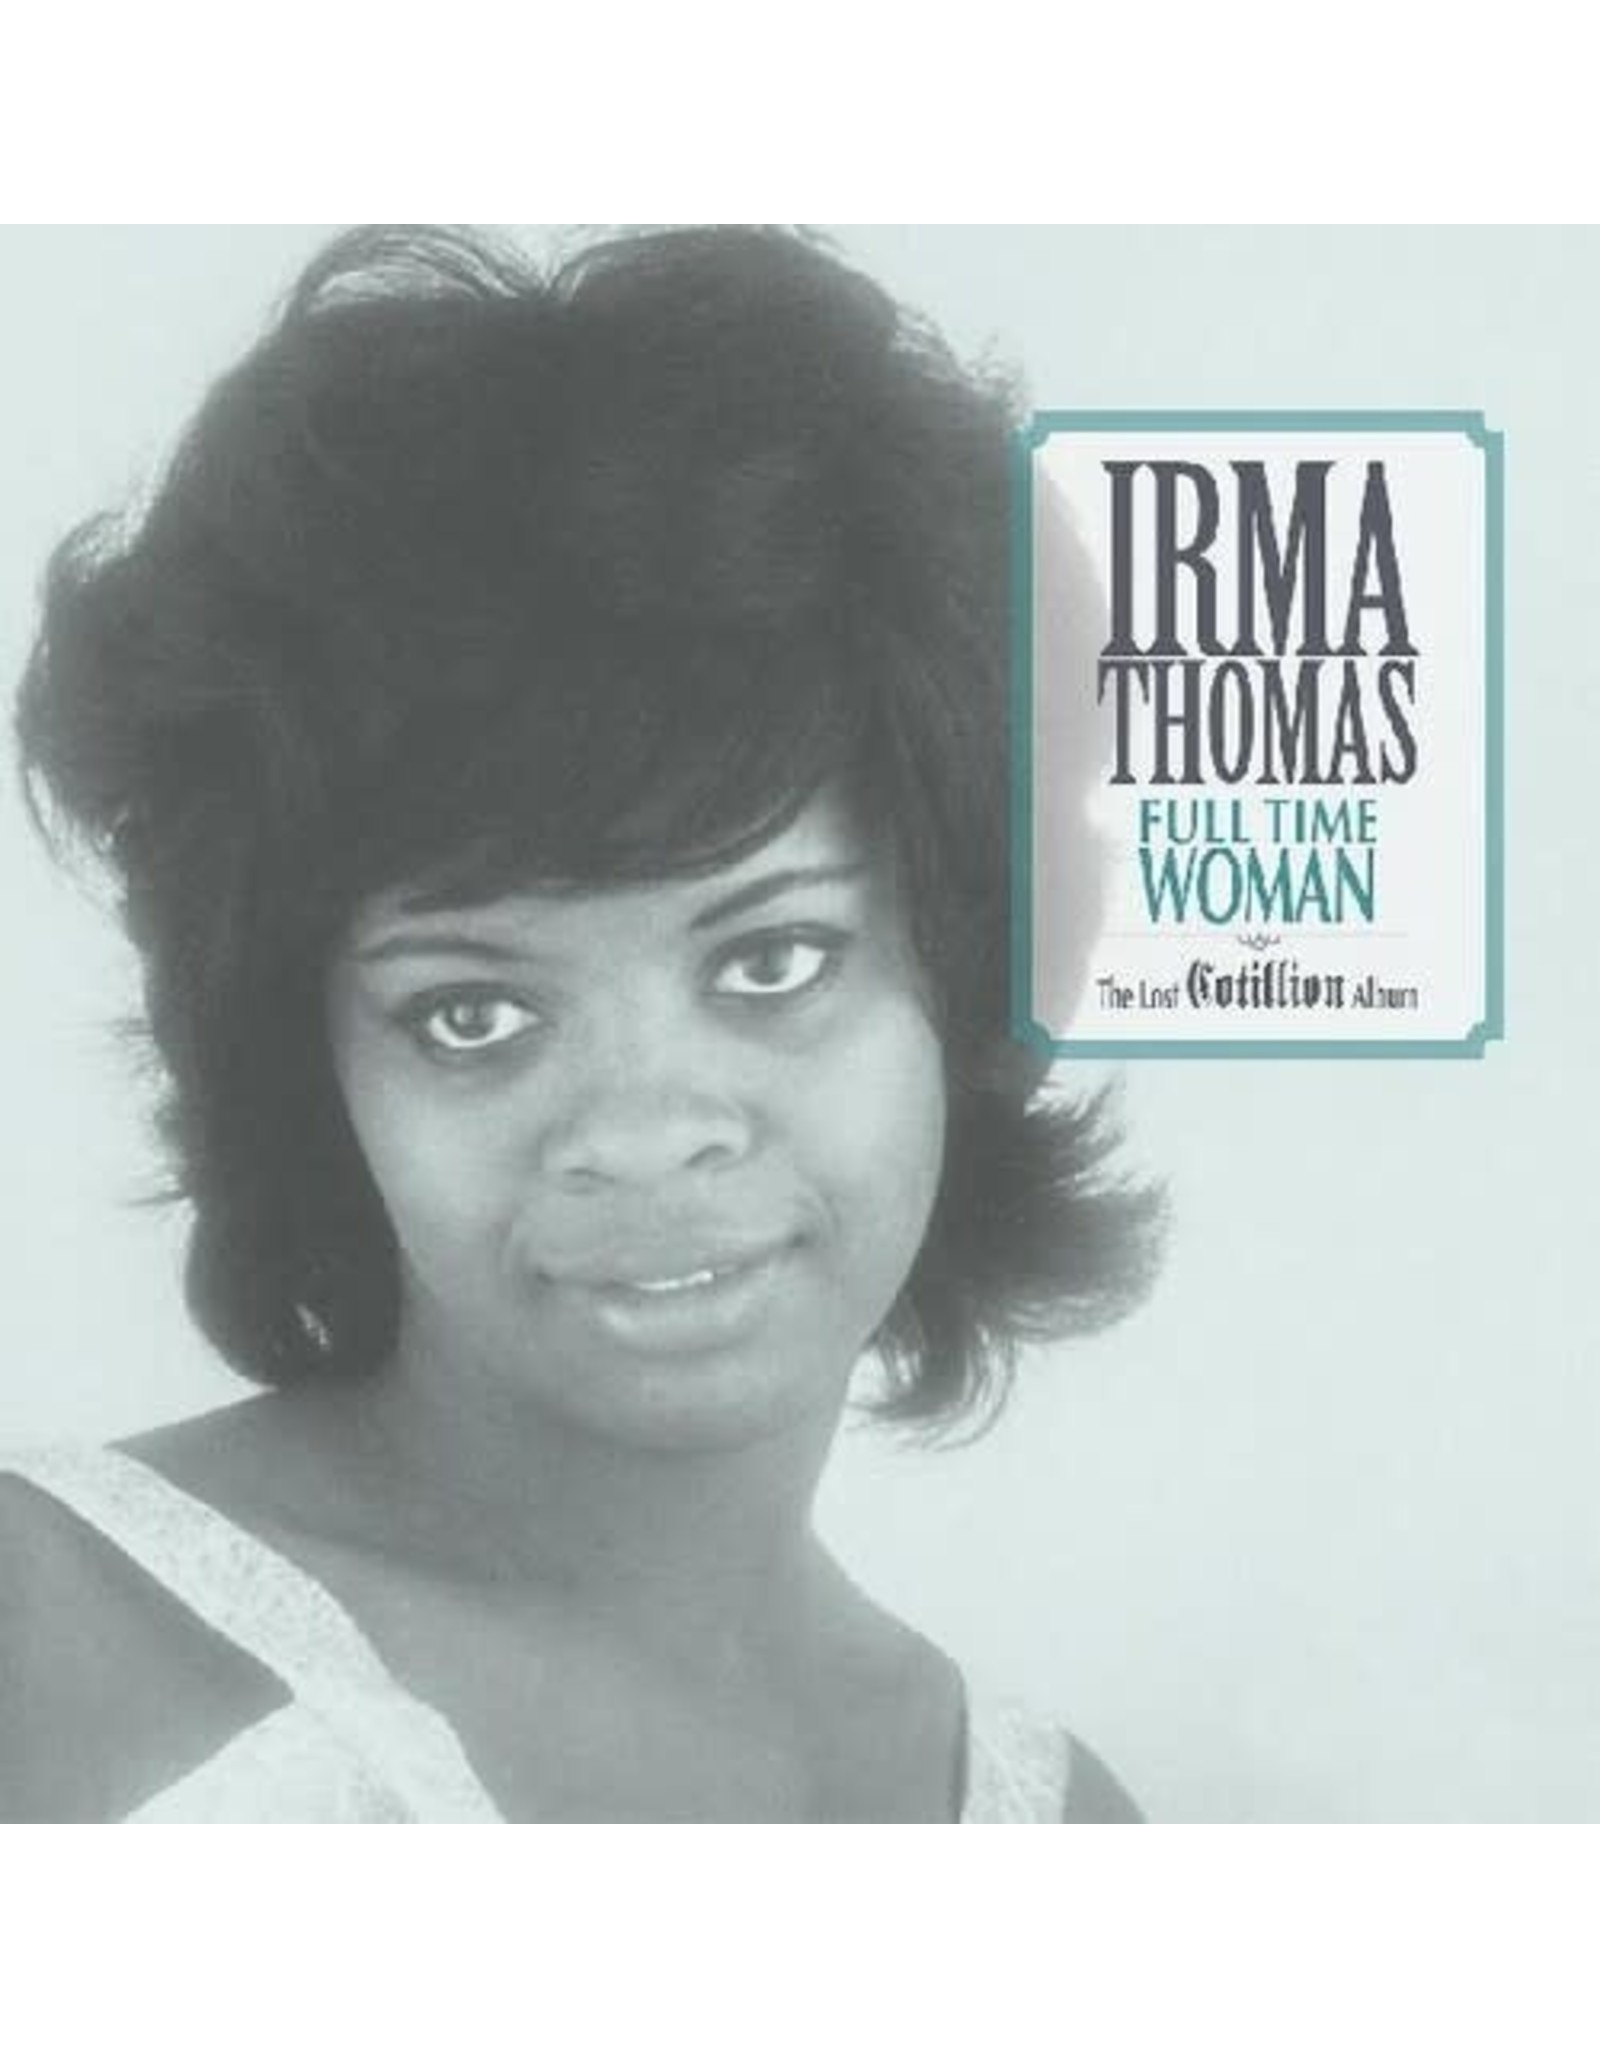 New Vinyl Irma Thomas - Full Time Woman—The Lost Cotillion Album (Light Blue) LP